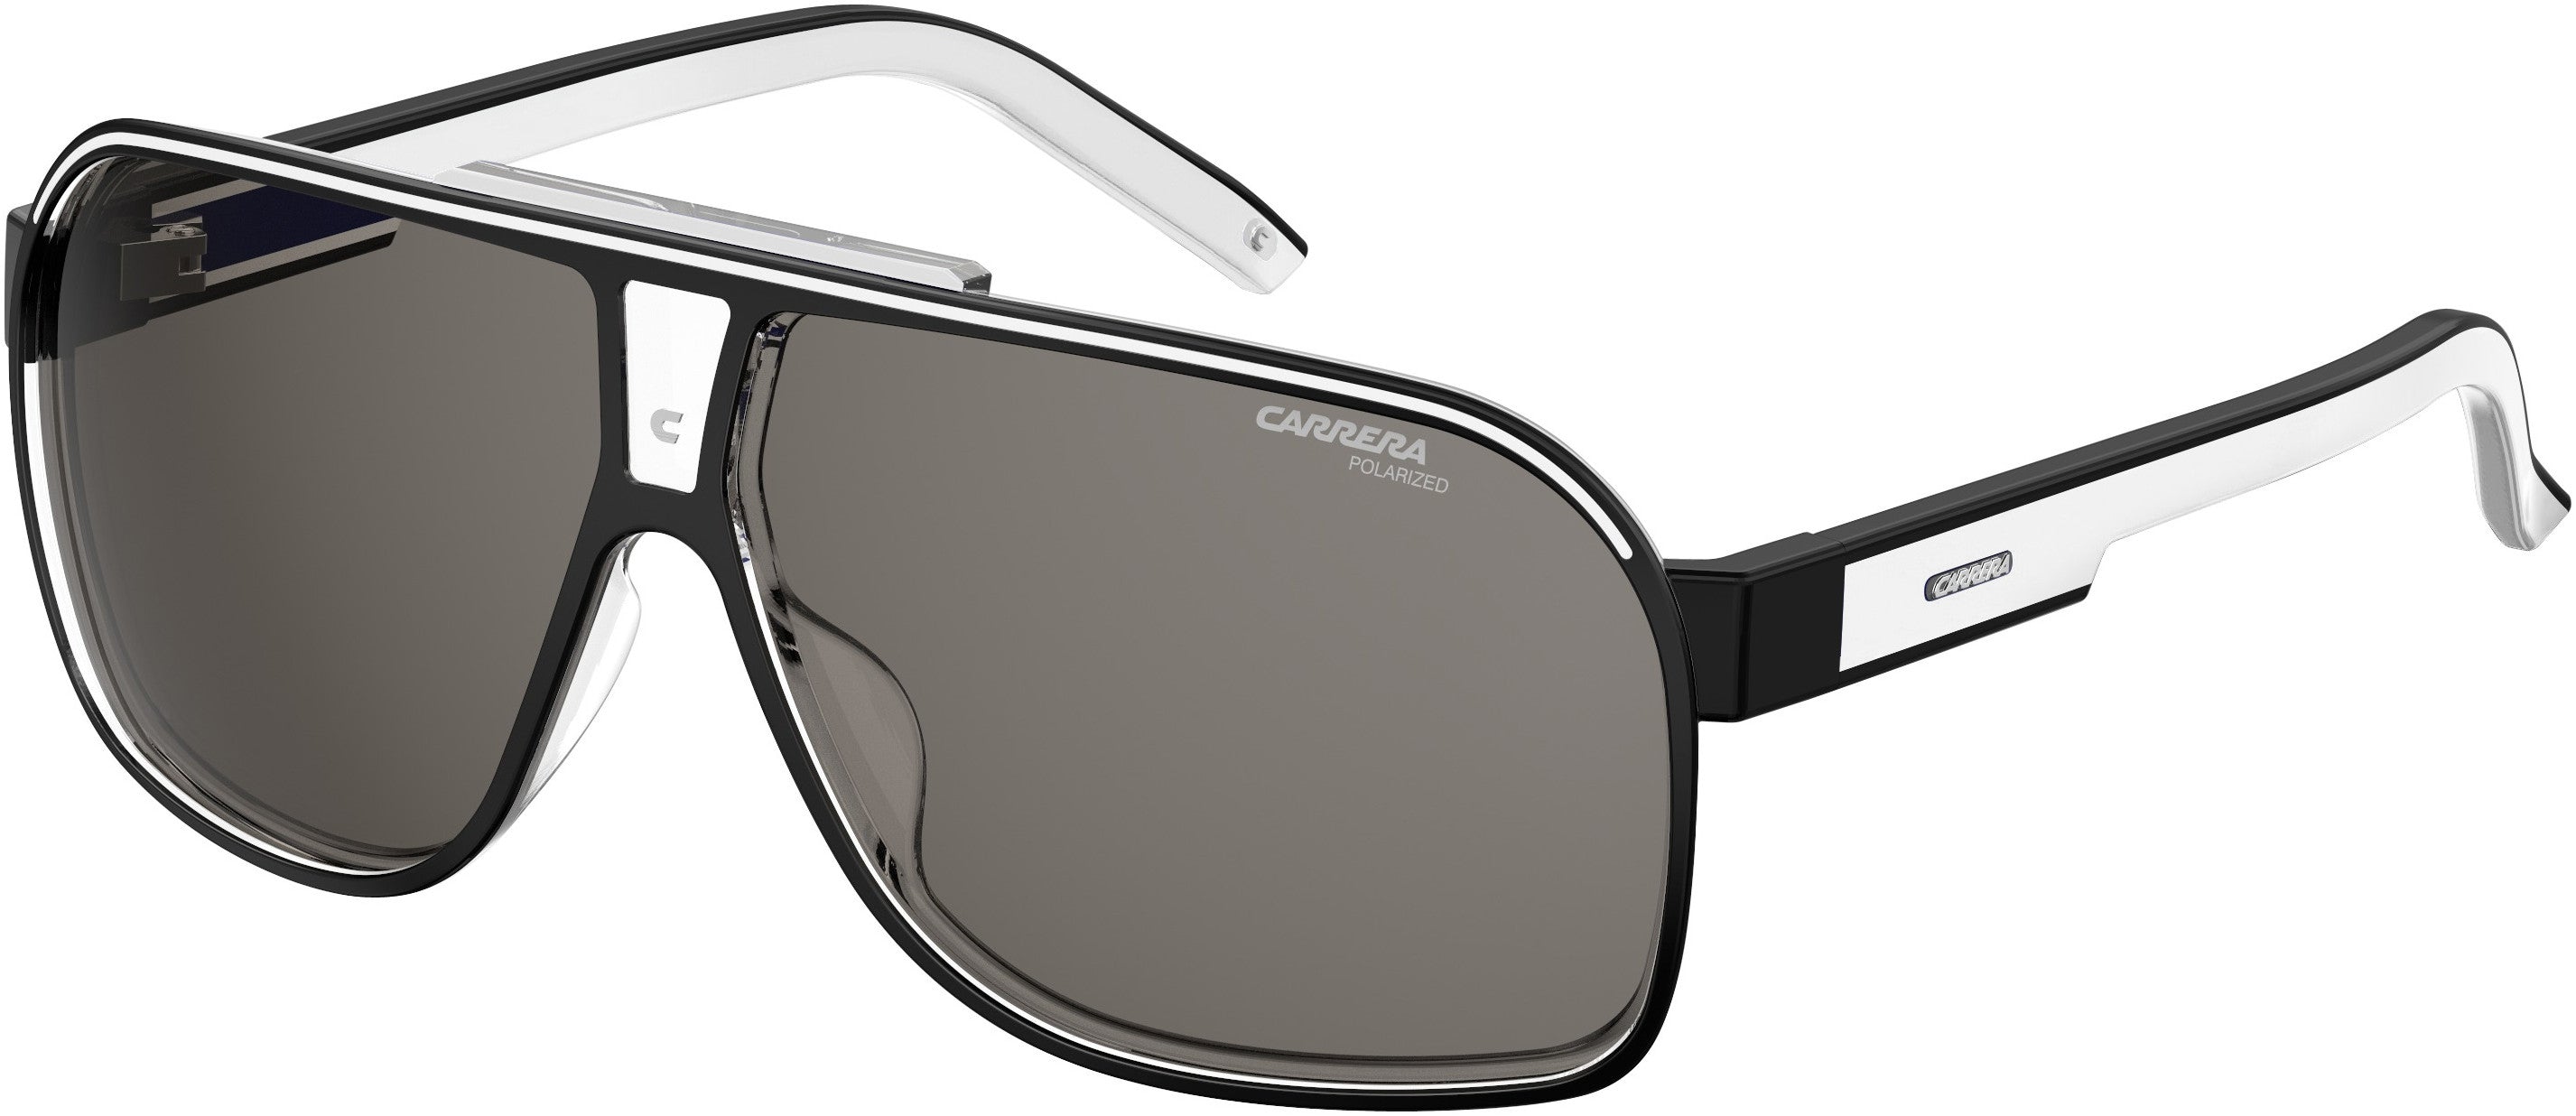 Carrera Grand Prix 2/S Rectangular Sunglasses 07C5-07C5  Black Crystal (M9 Gray Pz)